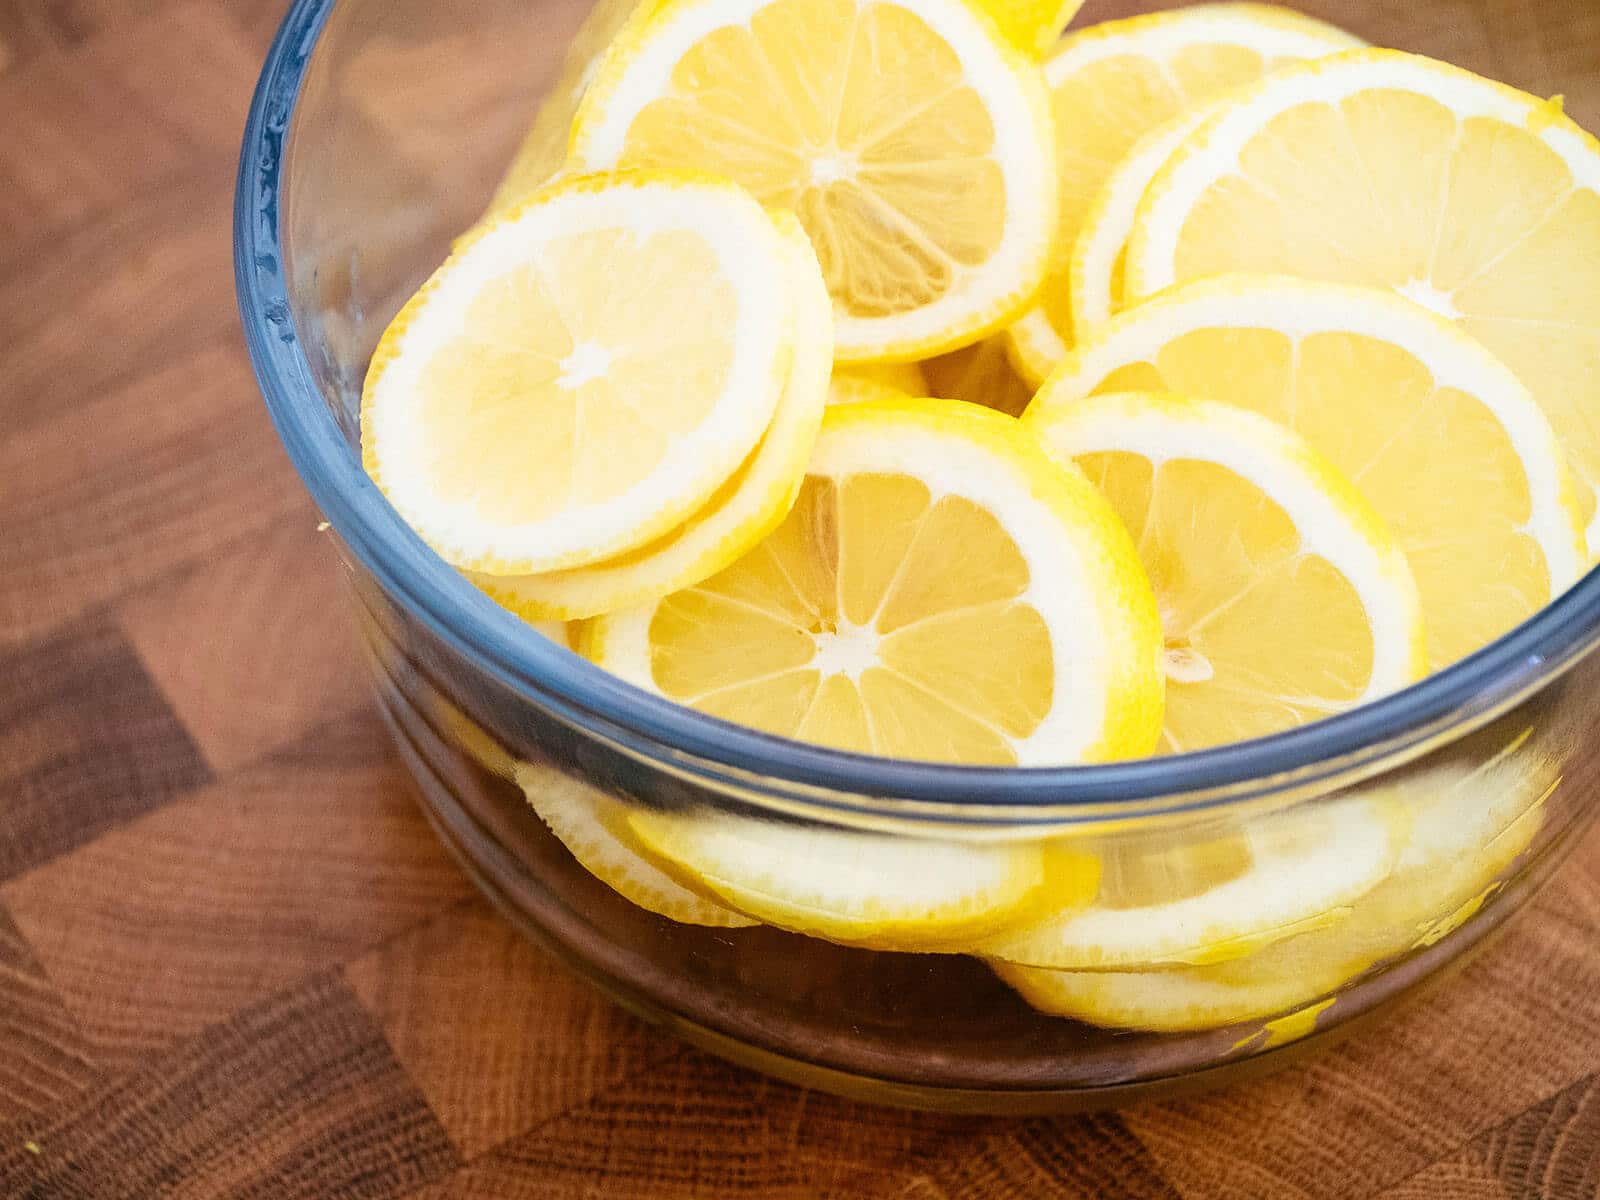 Bowl filled with lemon slices